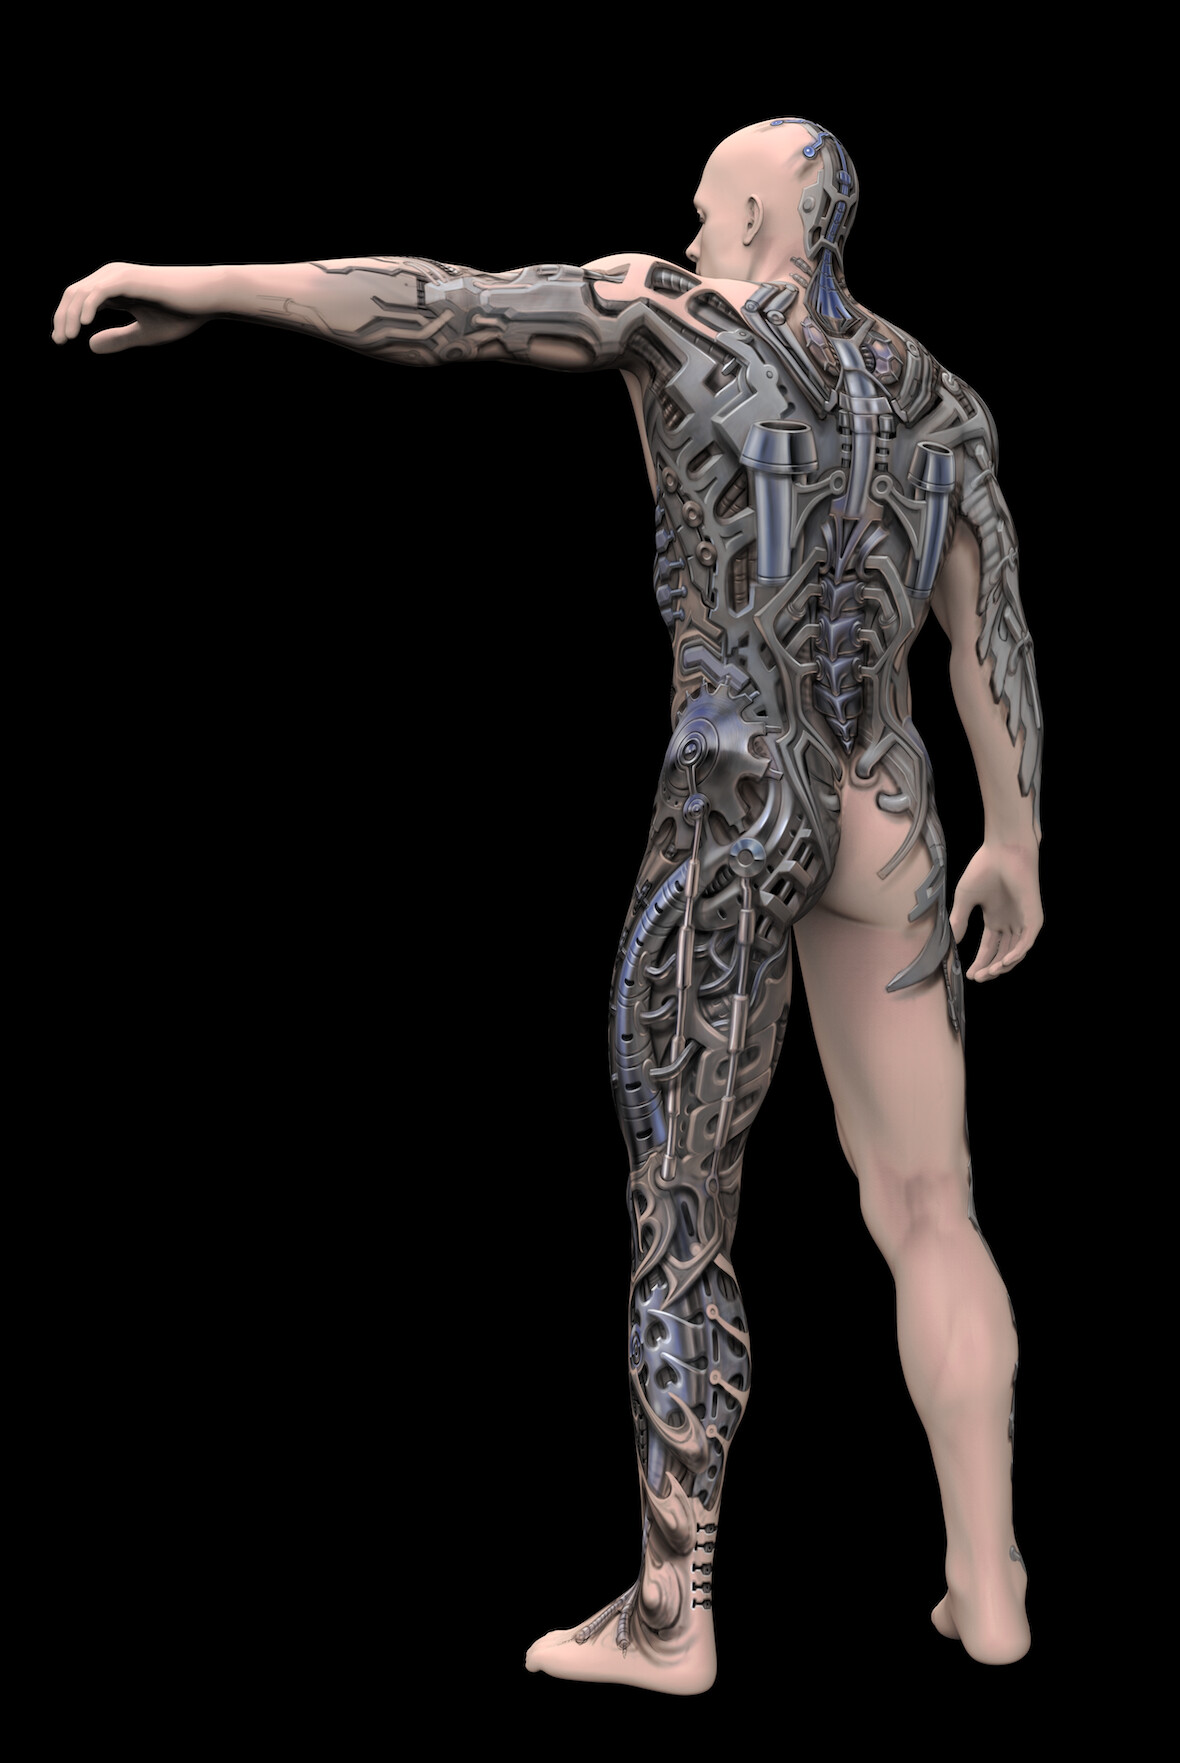 Anil Gupta Tattoo Biomechanical 0021 APR 2013 - YouTube